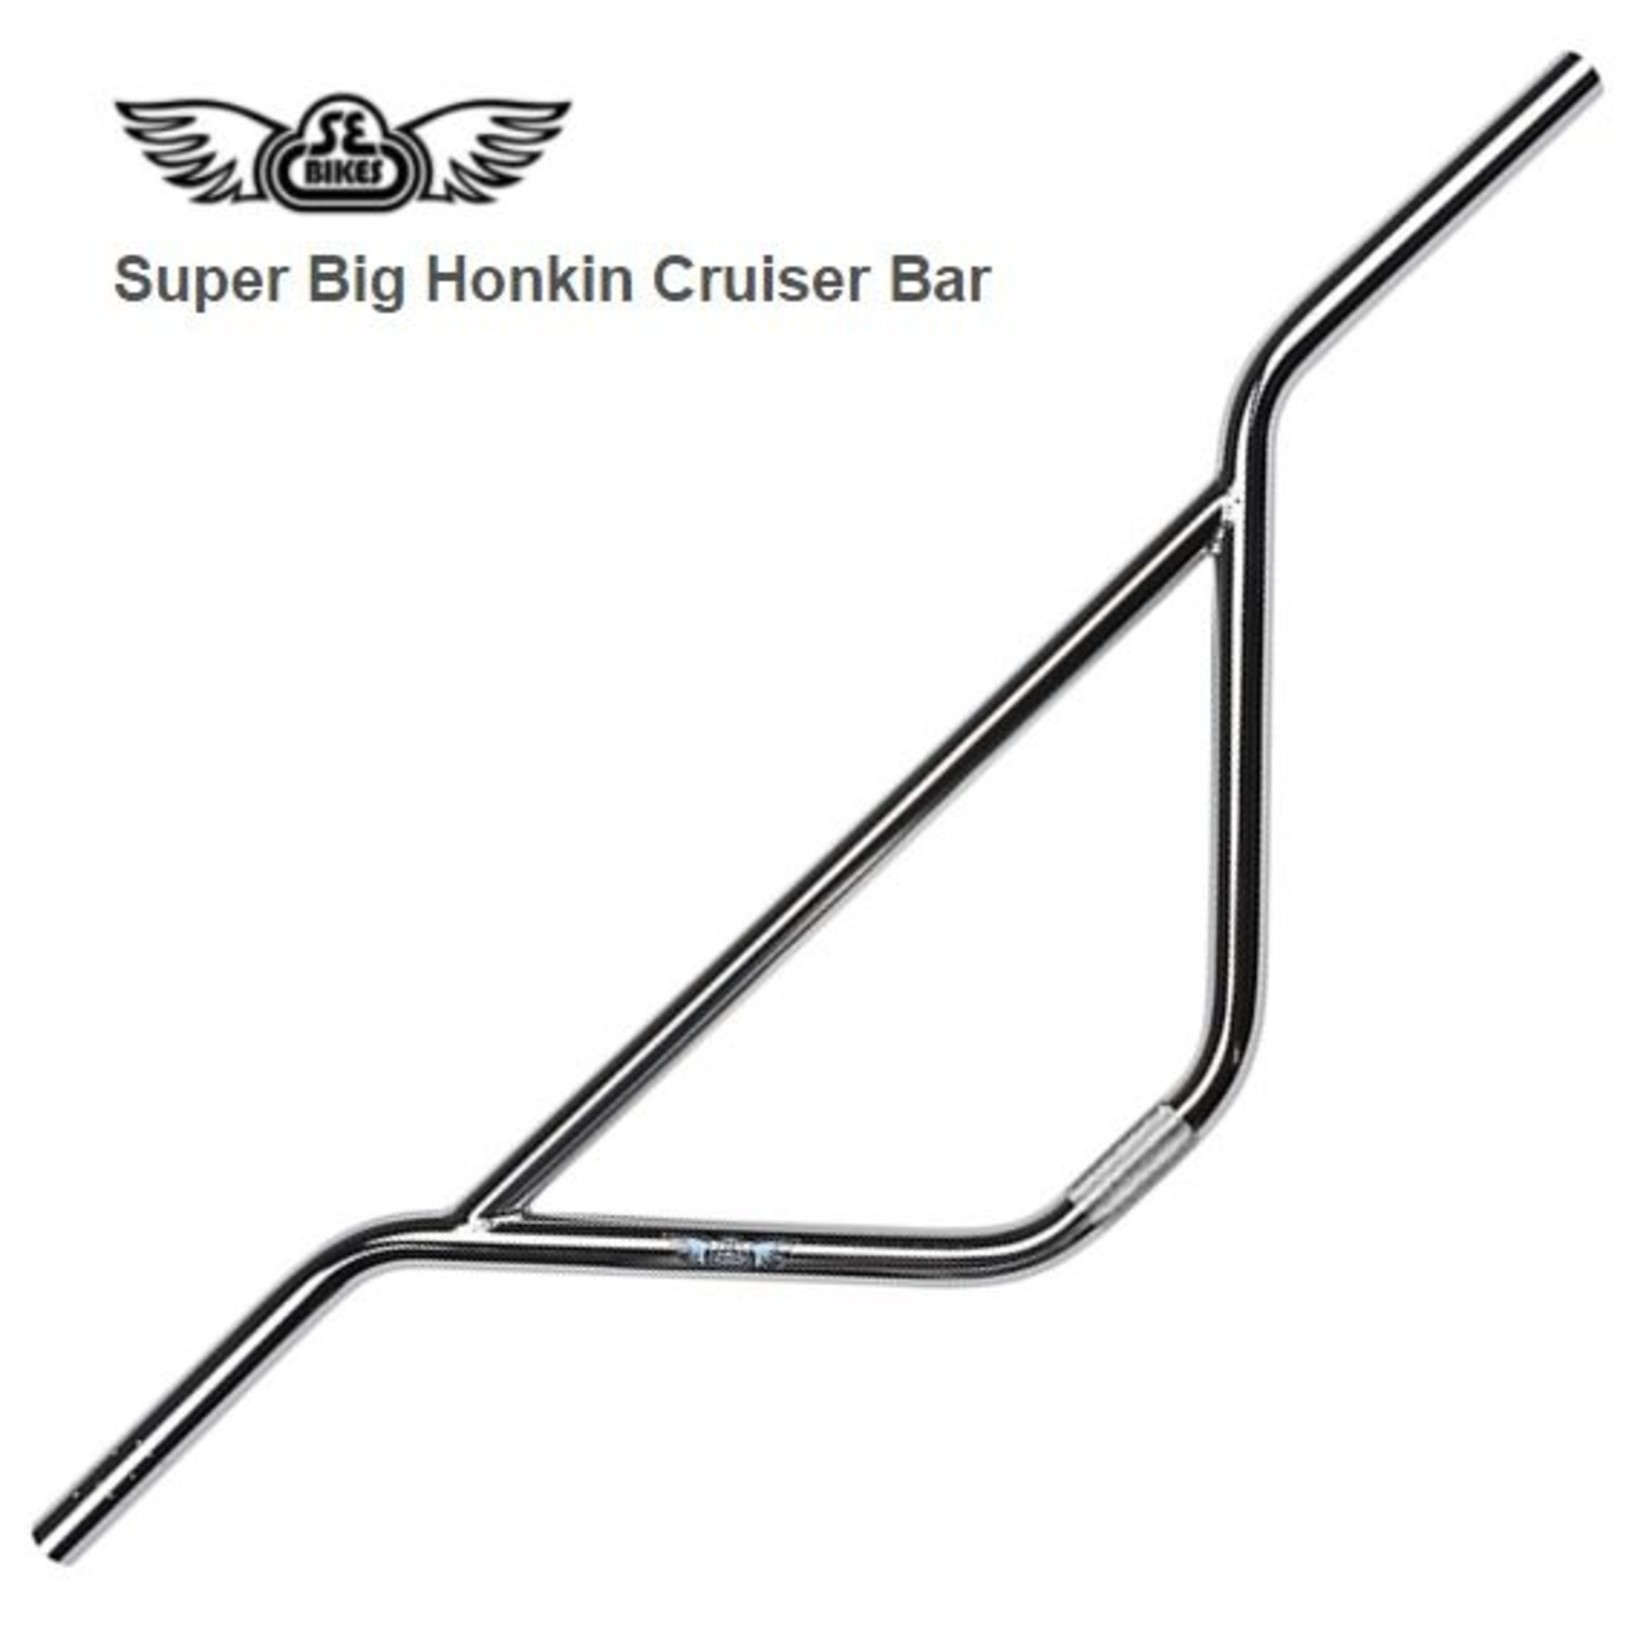 SE BIKES Se Racing Super Big Honkin Cruiser Bar